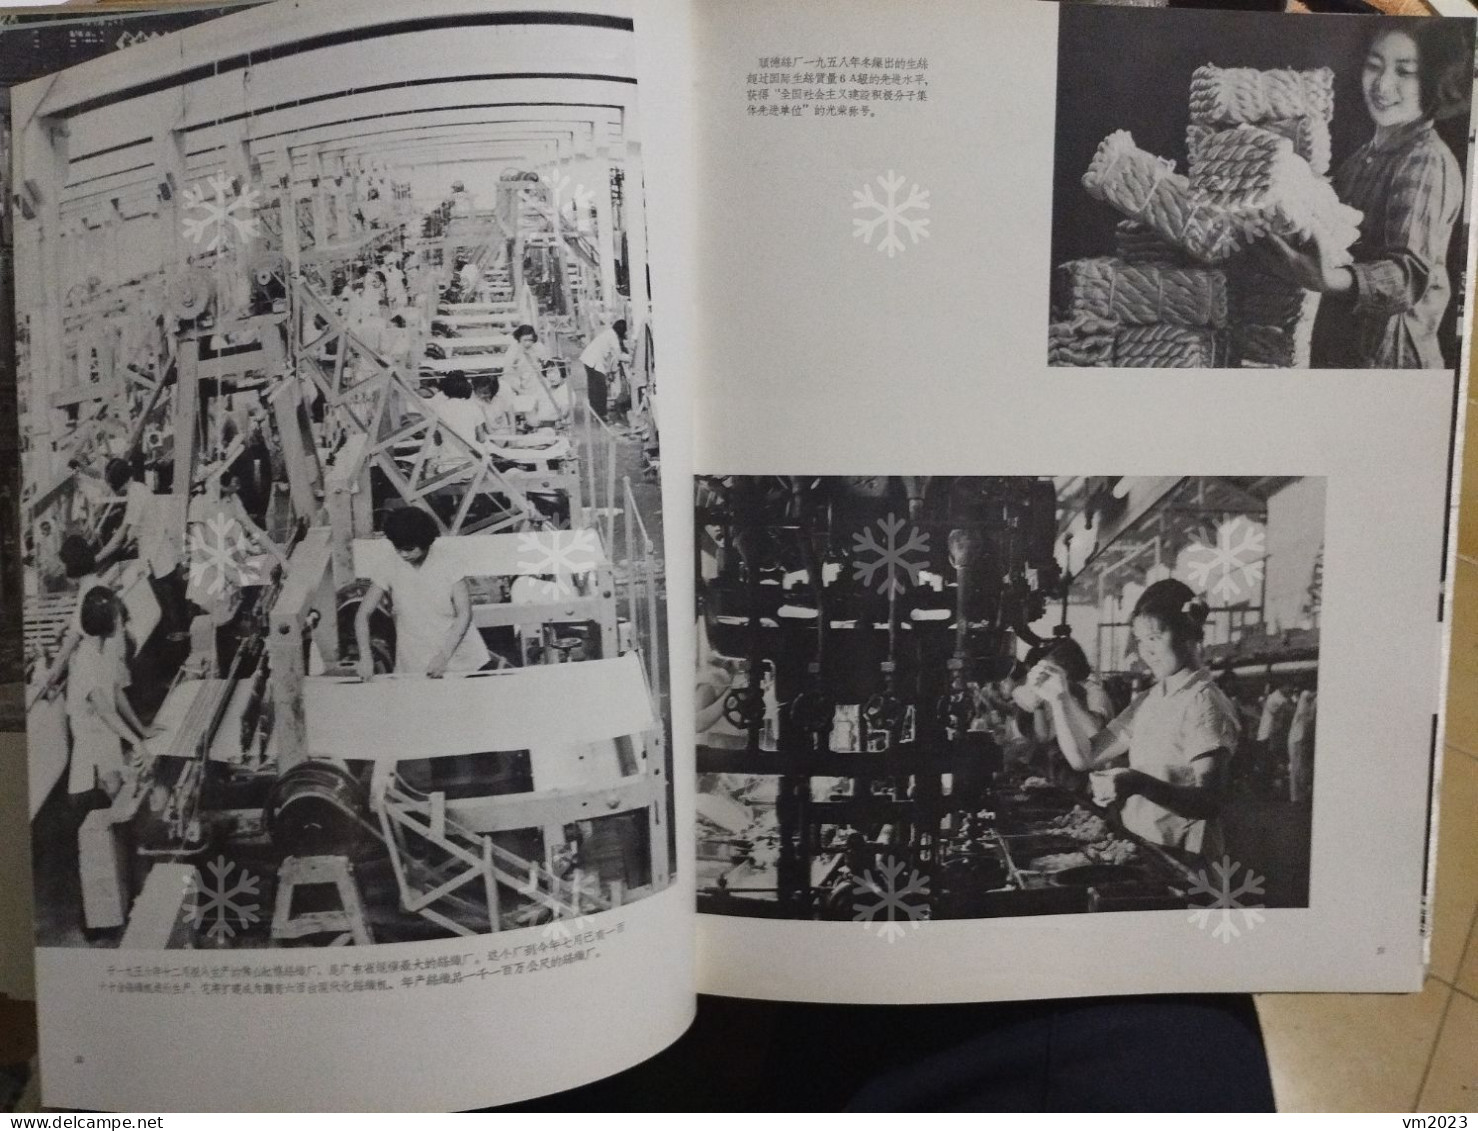 China Mao Tze Dung. Book KWANGTUNG Illustration of photo. 1949 - 1959